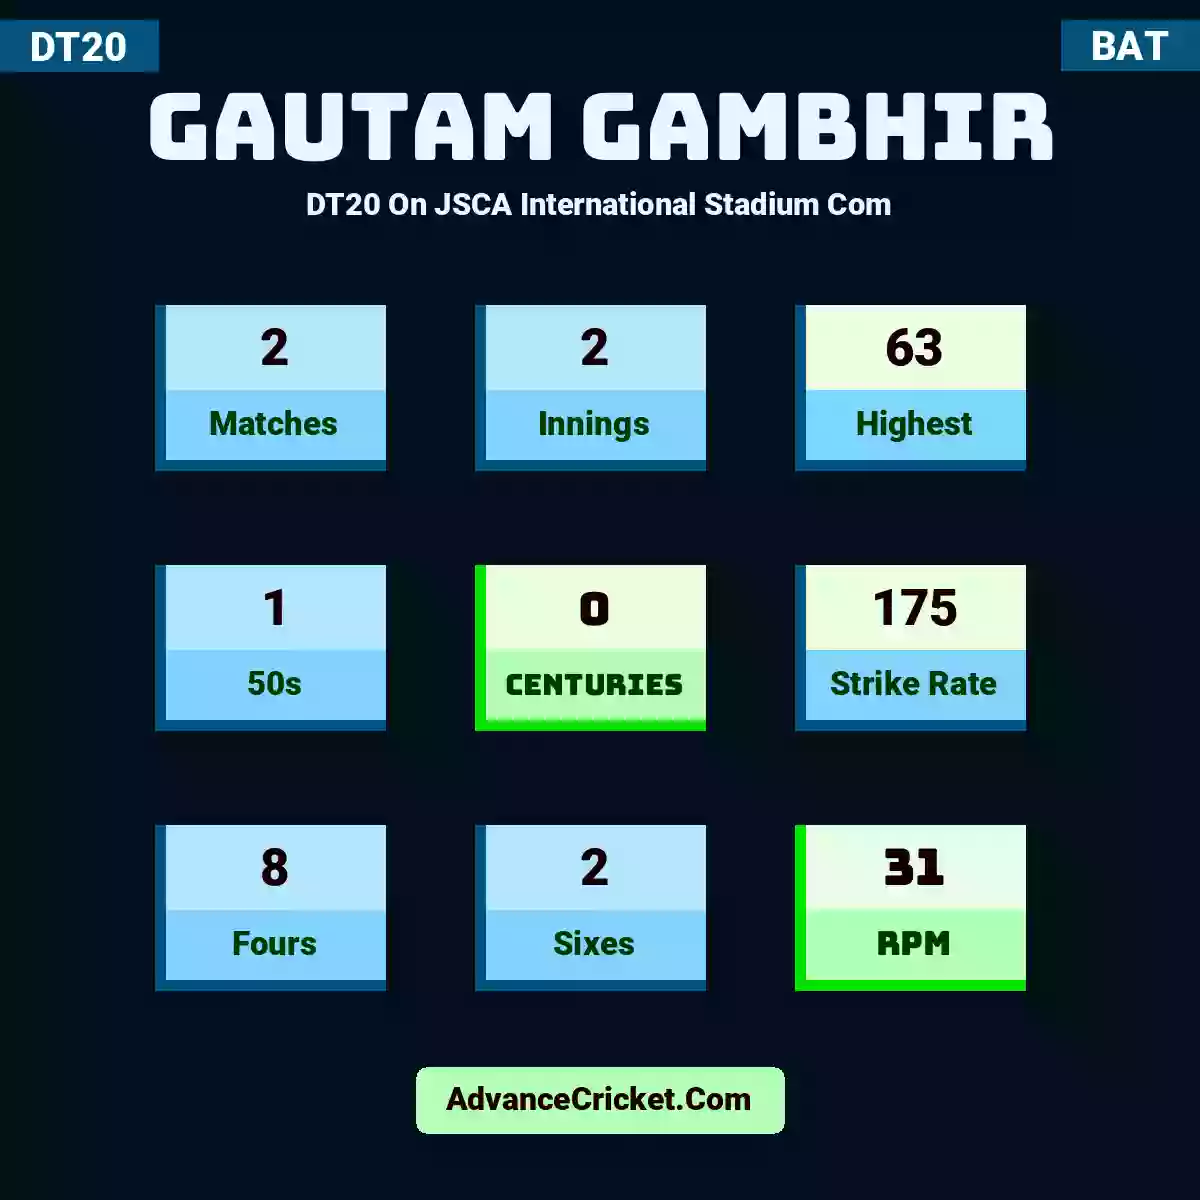 Gautam Gambhir DT20  On JSCA International Stadium Com, Gautam Gambhir played 2 matches, scored 63 runs as highest, 1 half-centuries, and 0 centuries, with a strike rate of 175. G.Gambhir hit 8 fours and 2 sixes, with an RPM of 31.